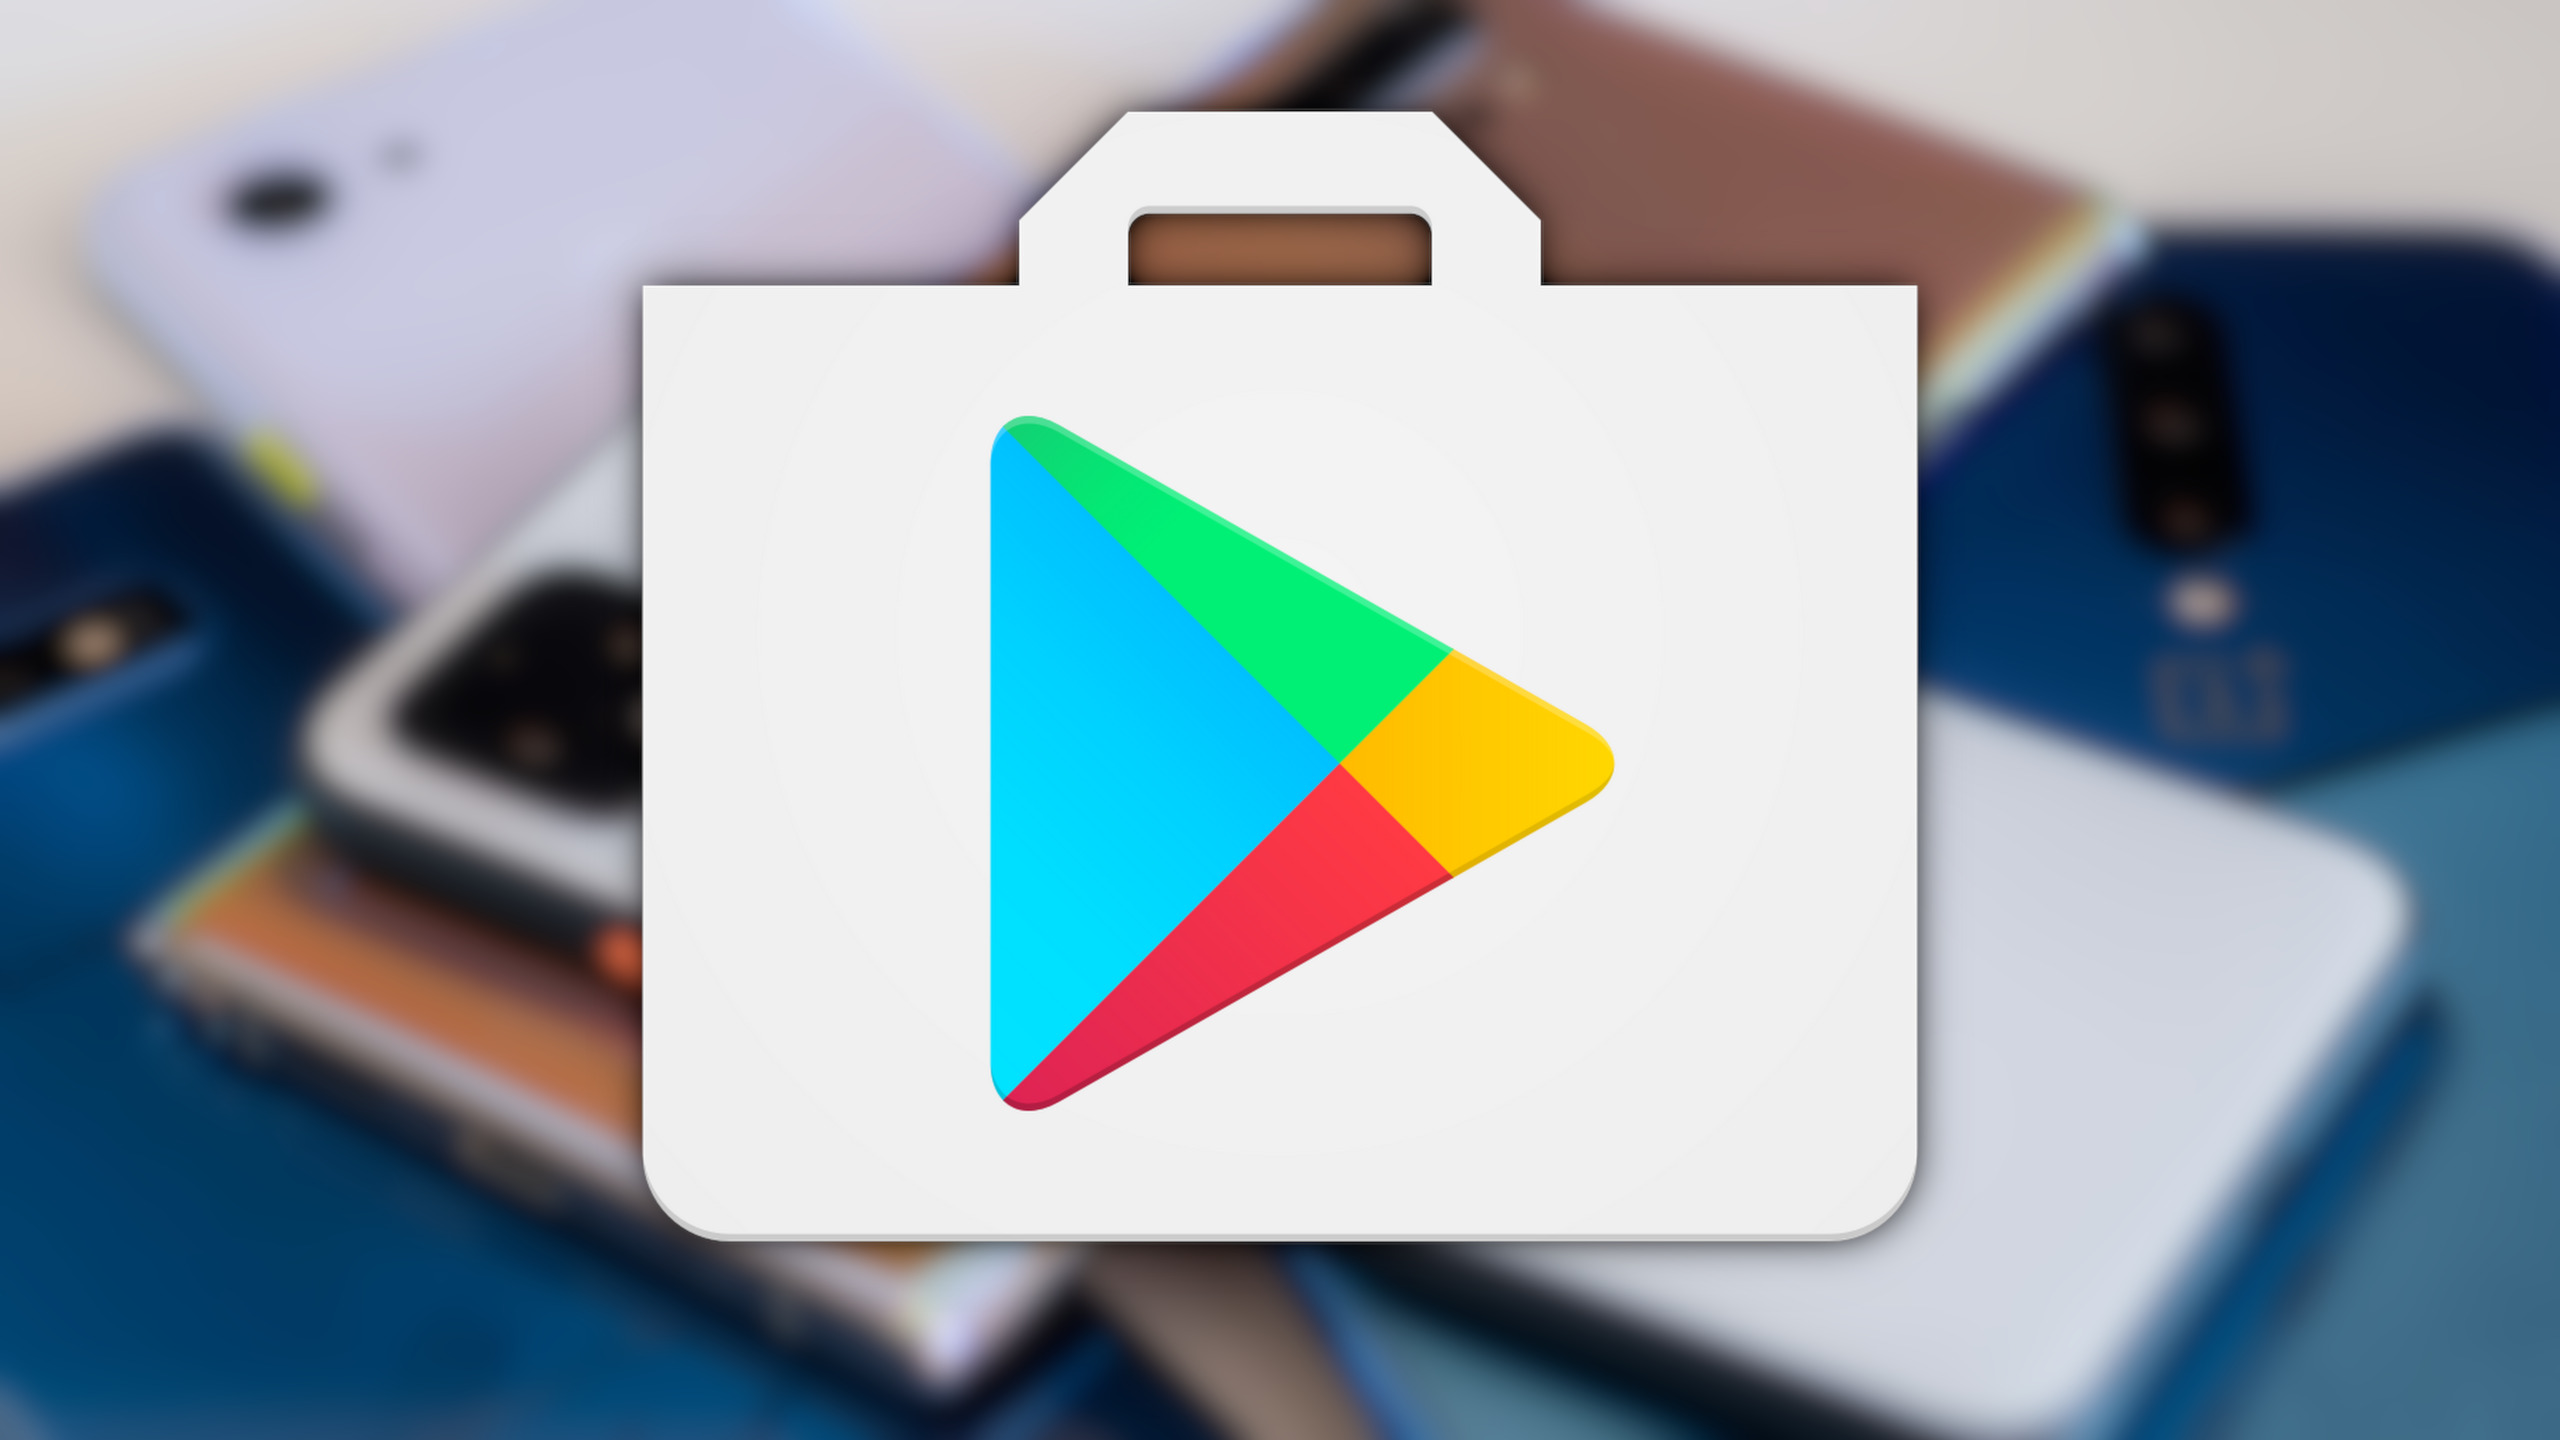 google app store download